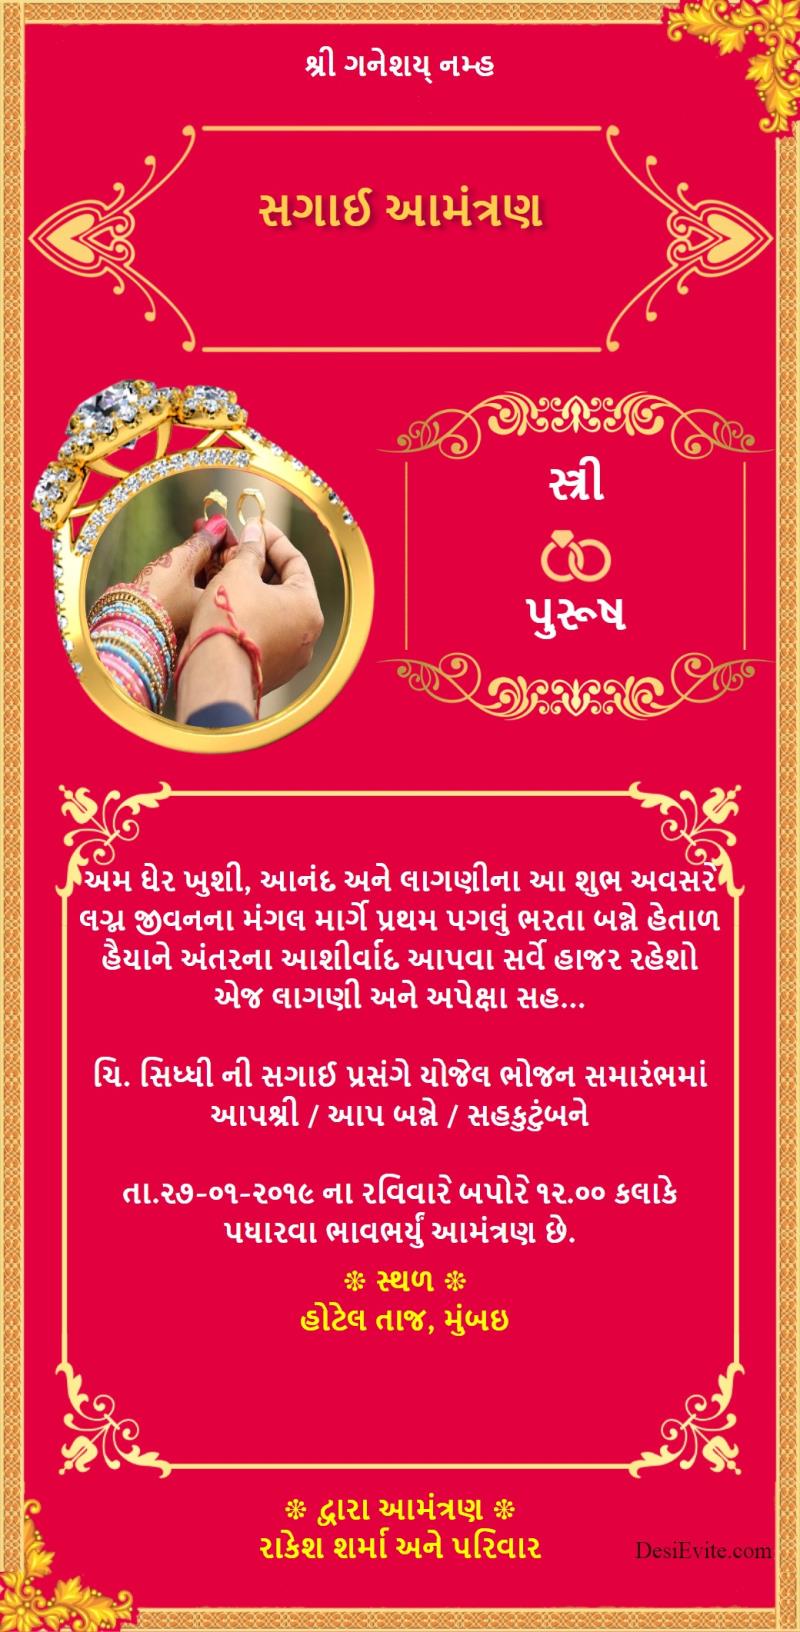 Gujarati engagement invitation e card free ring hand